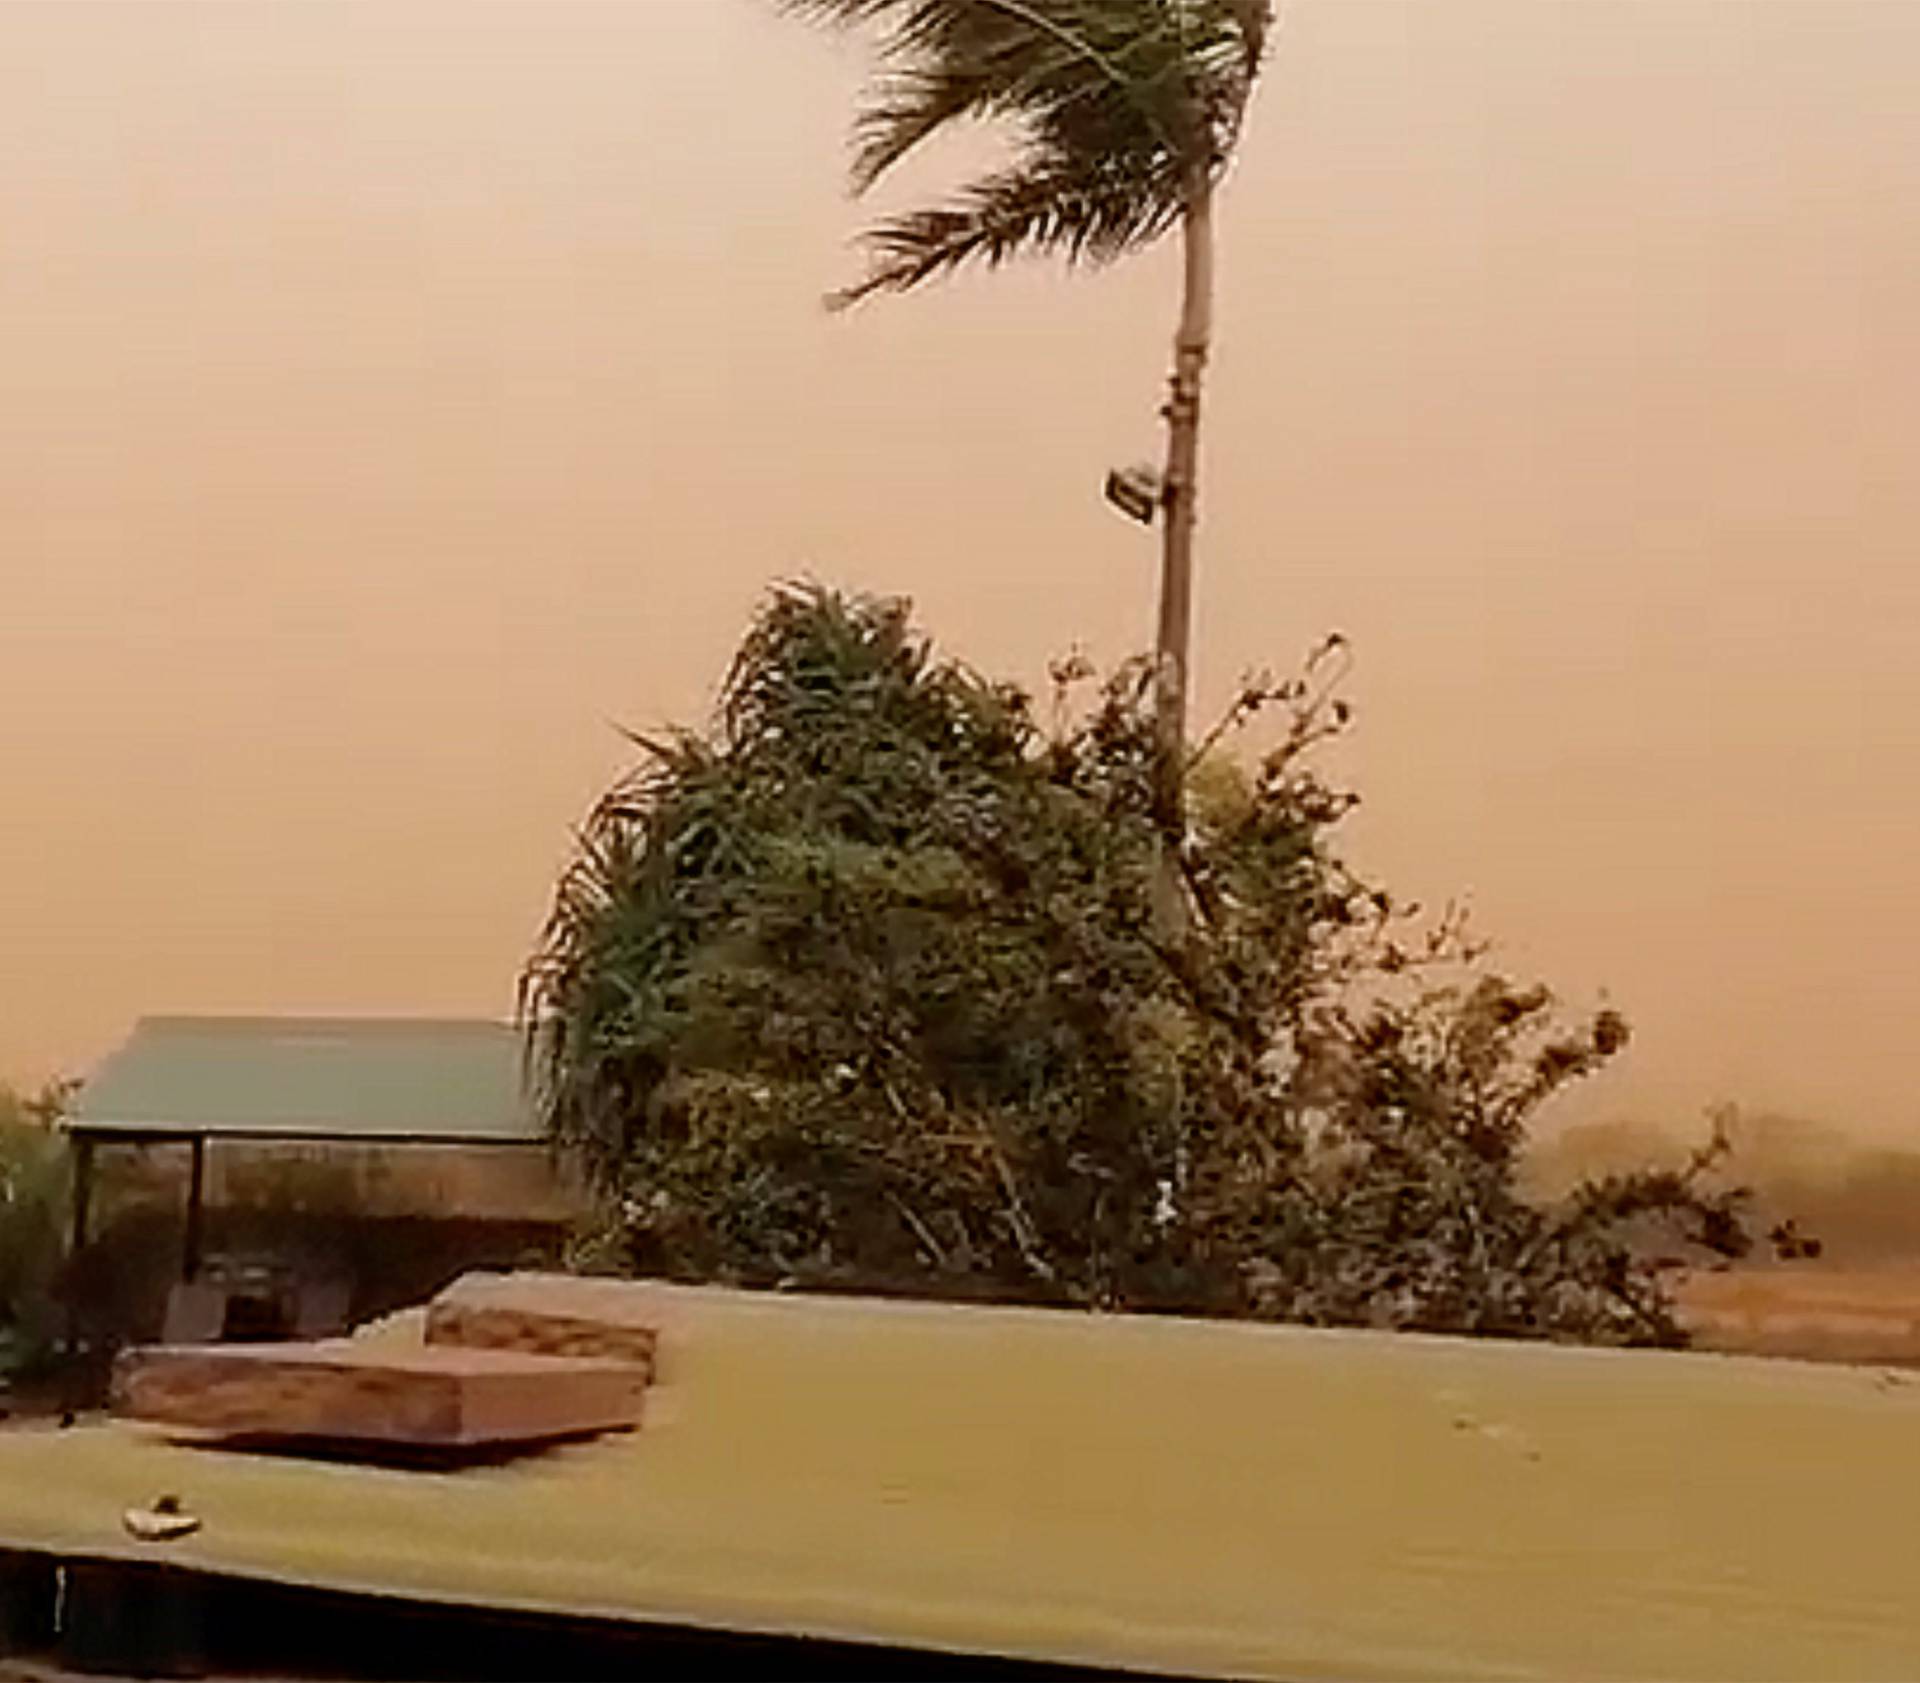 A dust storm blows across Carnarvon, Western Australia